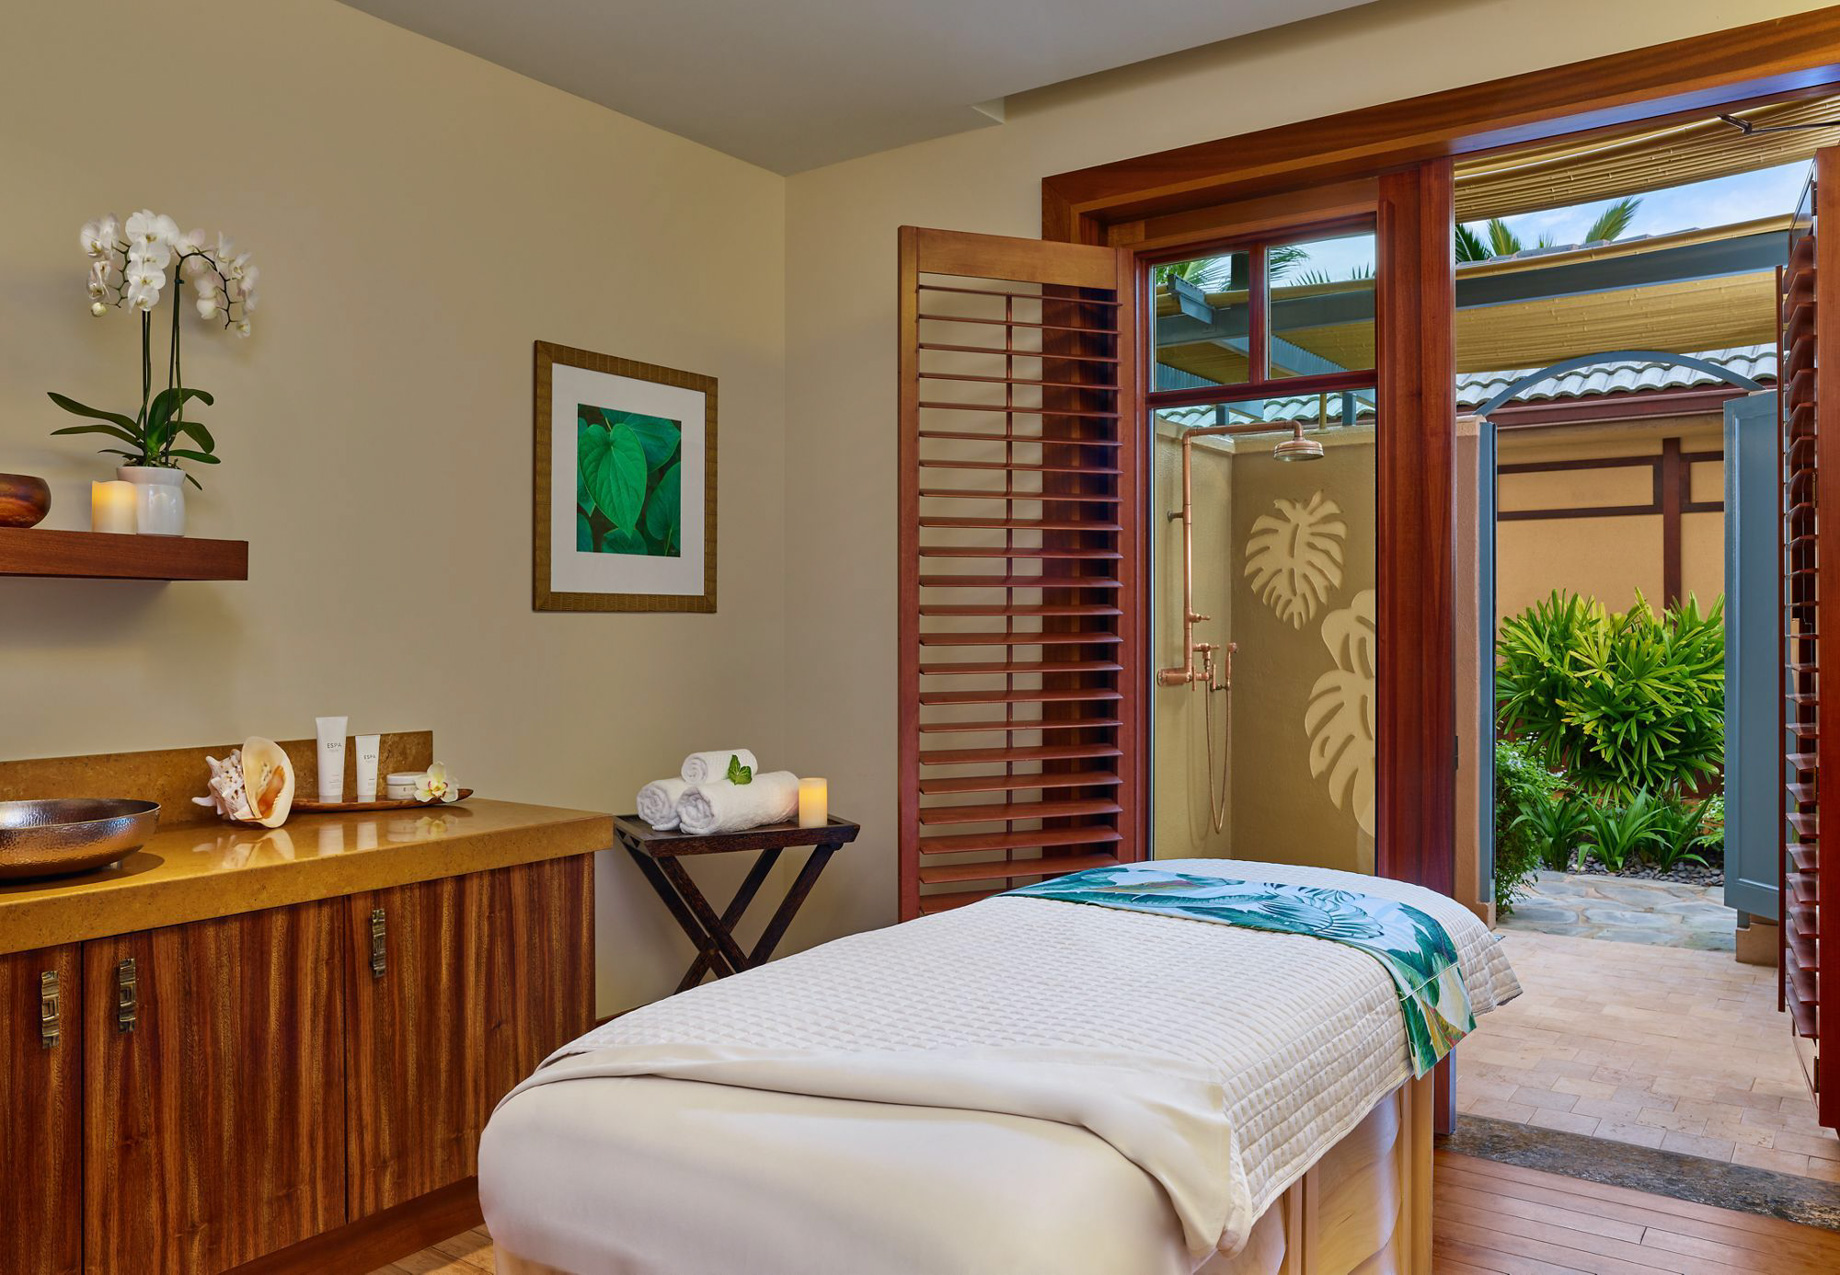 The Ritz-Carlton Maui, Kapalua Resort - Kapalua, HI, USA - Spa Treatment Room